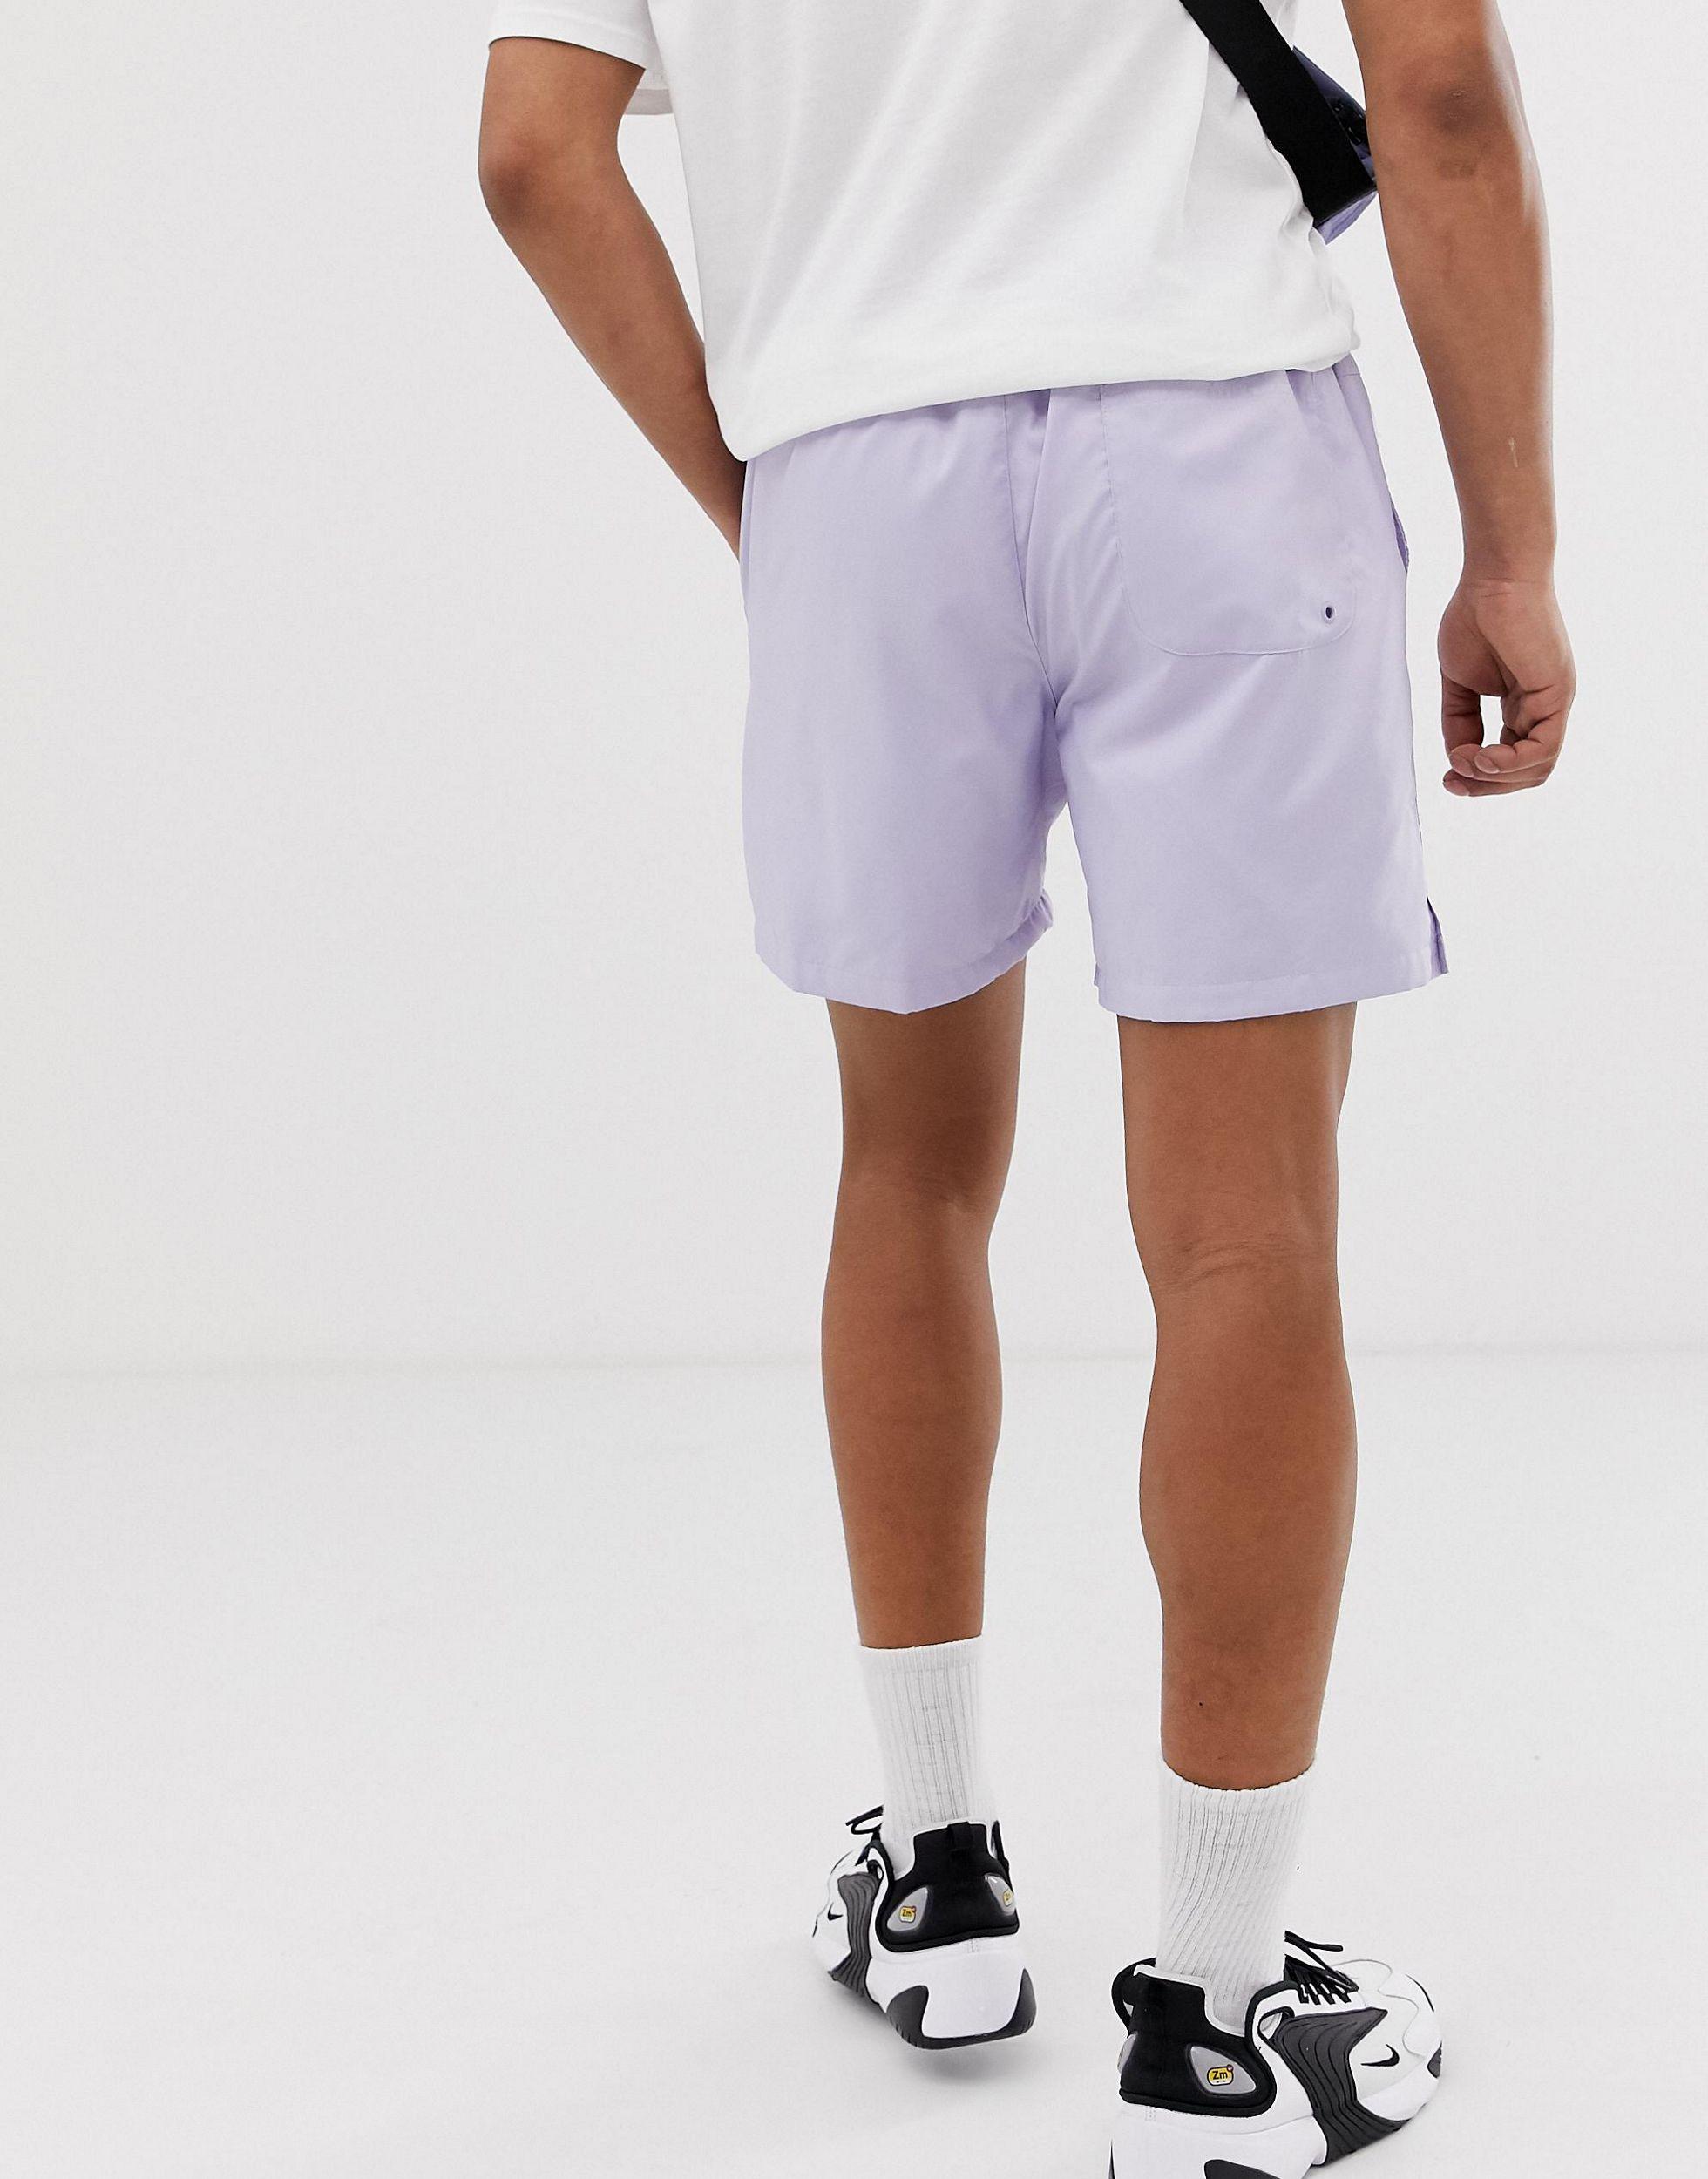 Buy > light purple nike shorts > in stock